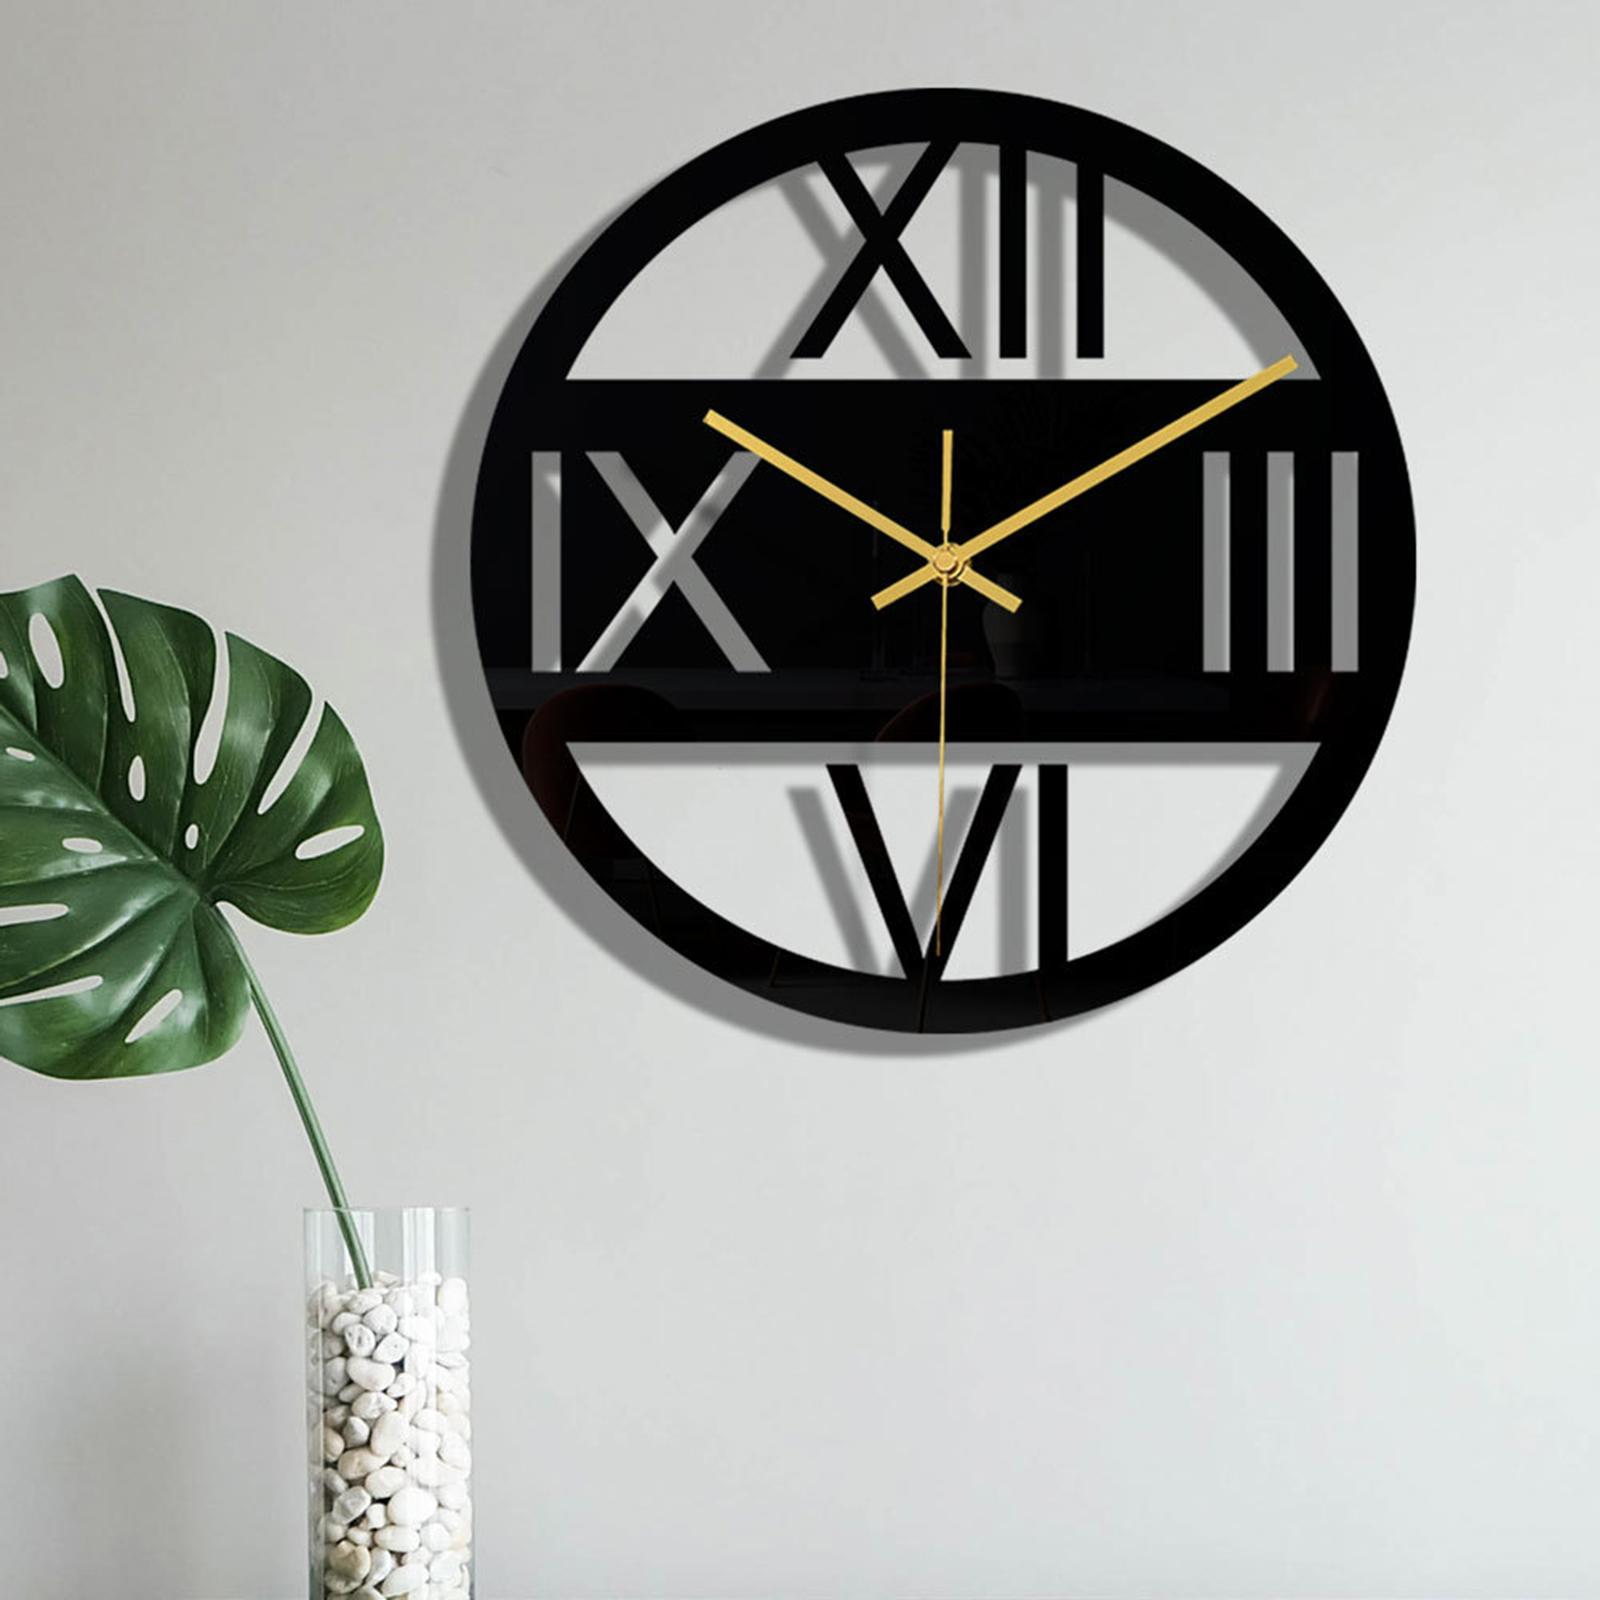 Minimalist Wall Clock Gift Decor Home Silent Clocks Acrylic Black Art